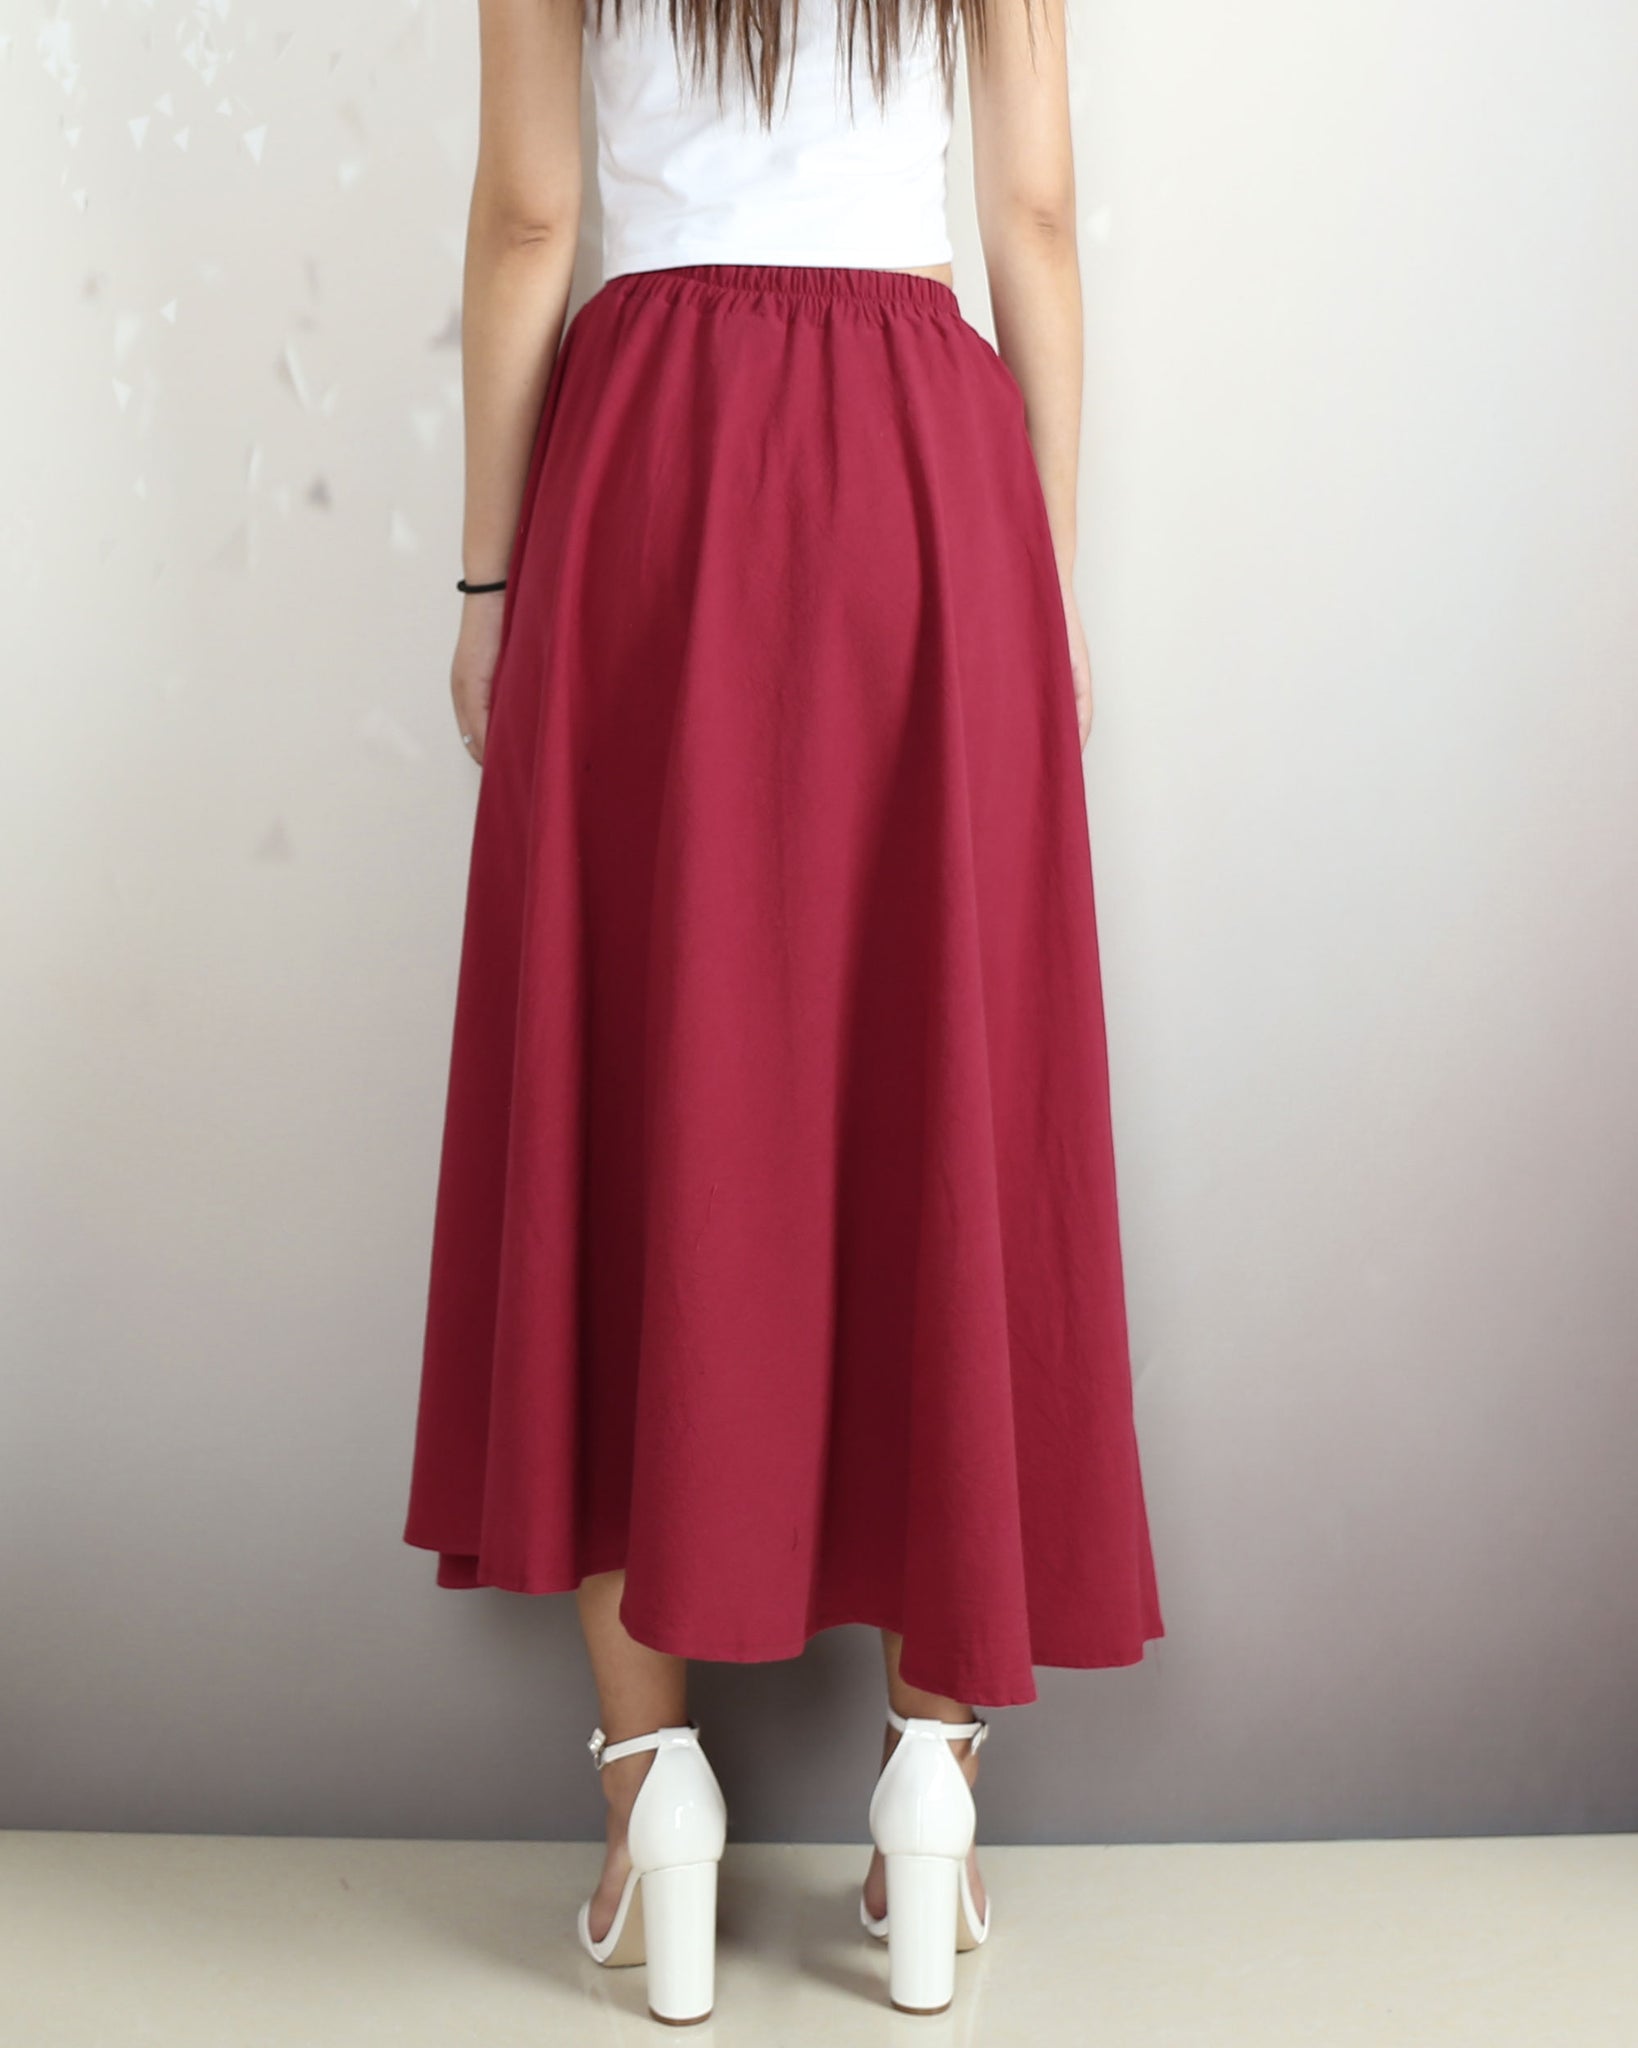 Linen Cotton Boho Chic Layered Tassels High Waist Pom Poms Mini Skirts, L / Red